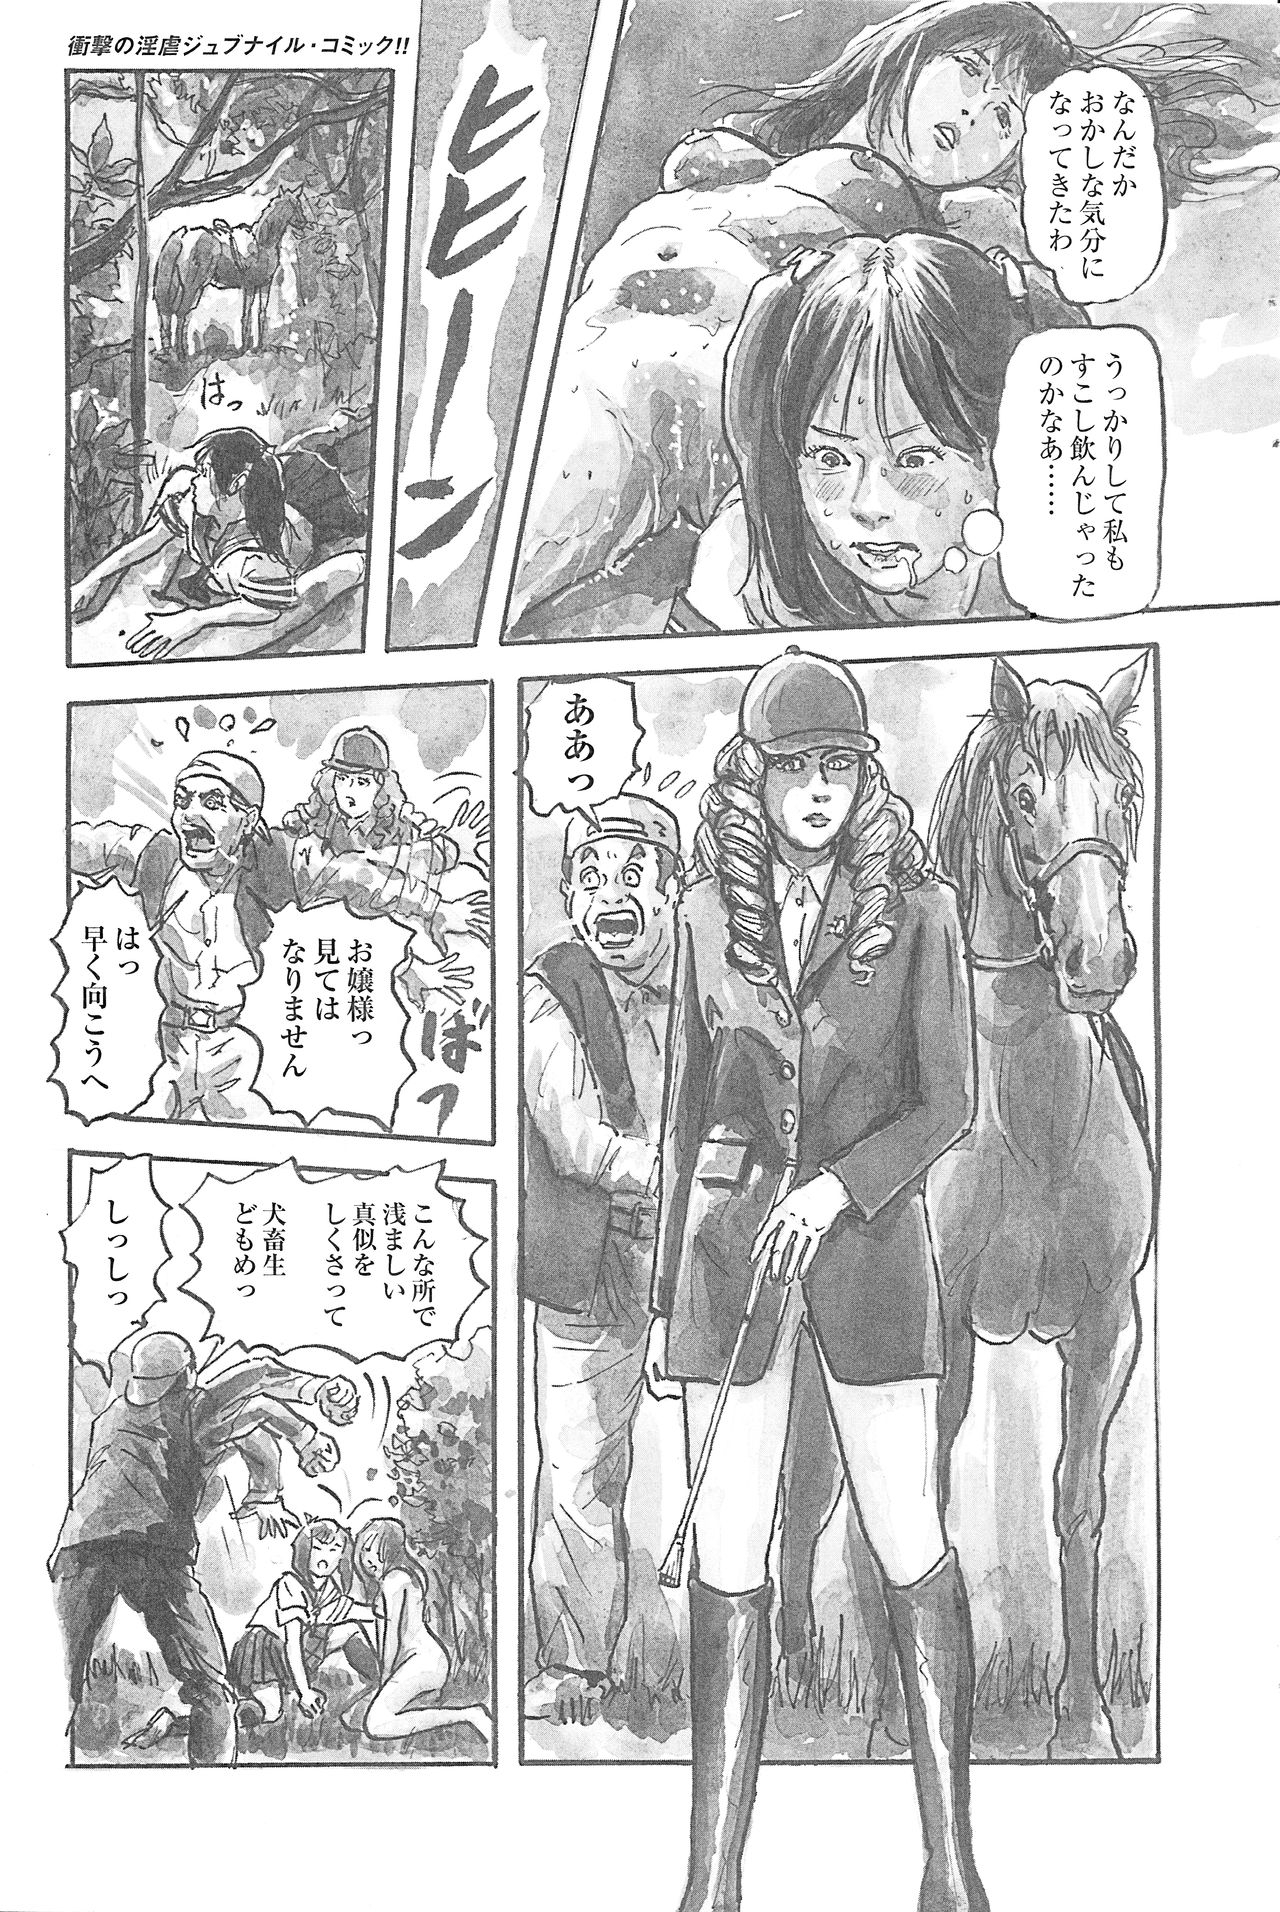 [Kiyoaki Kanai] Girl Detective Team part 4 「Dream Girl」 2